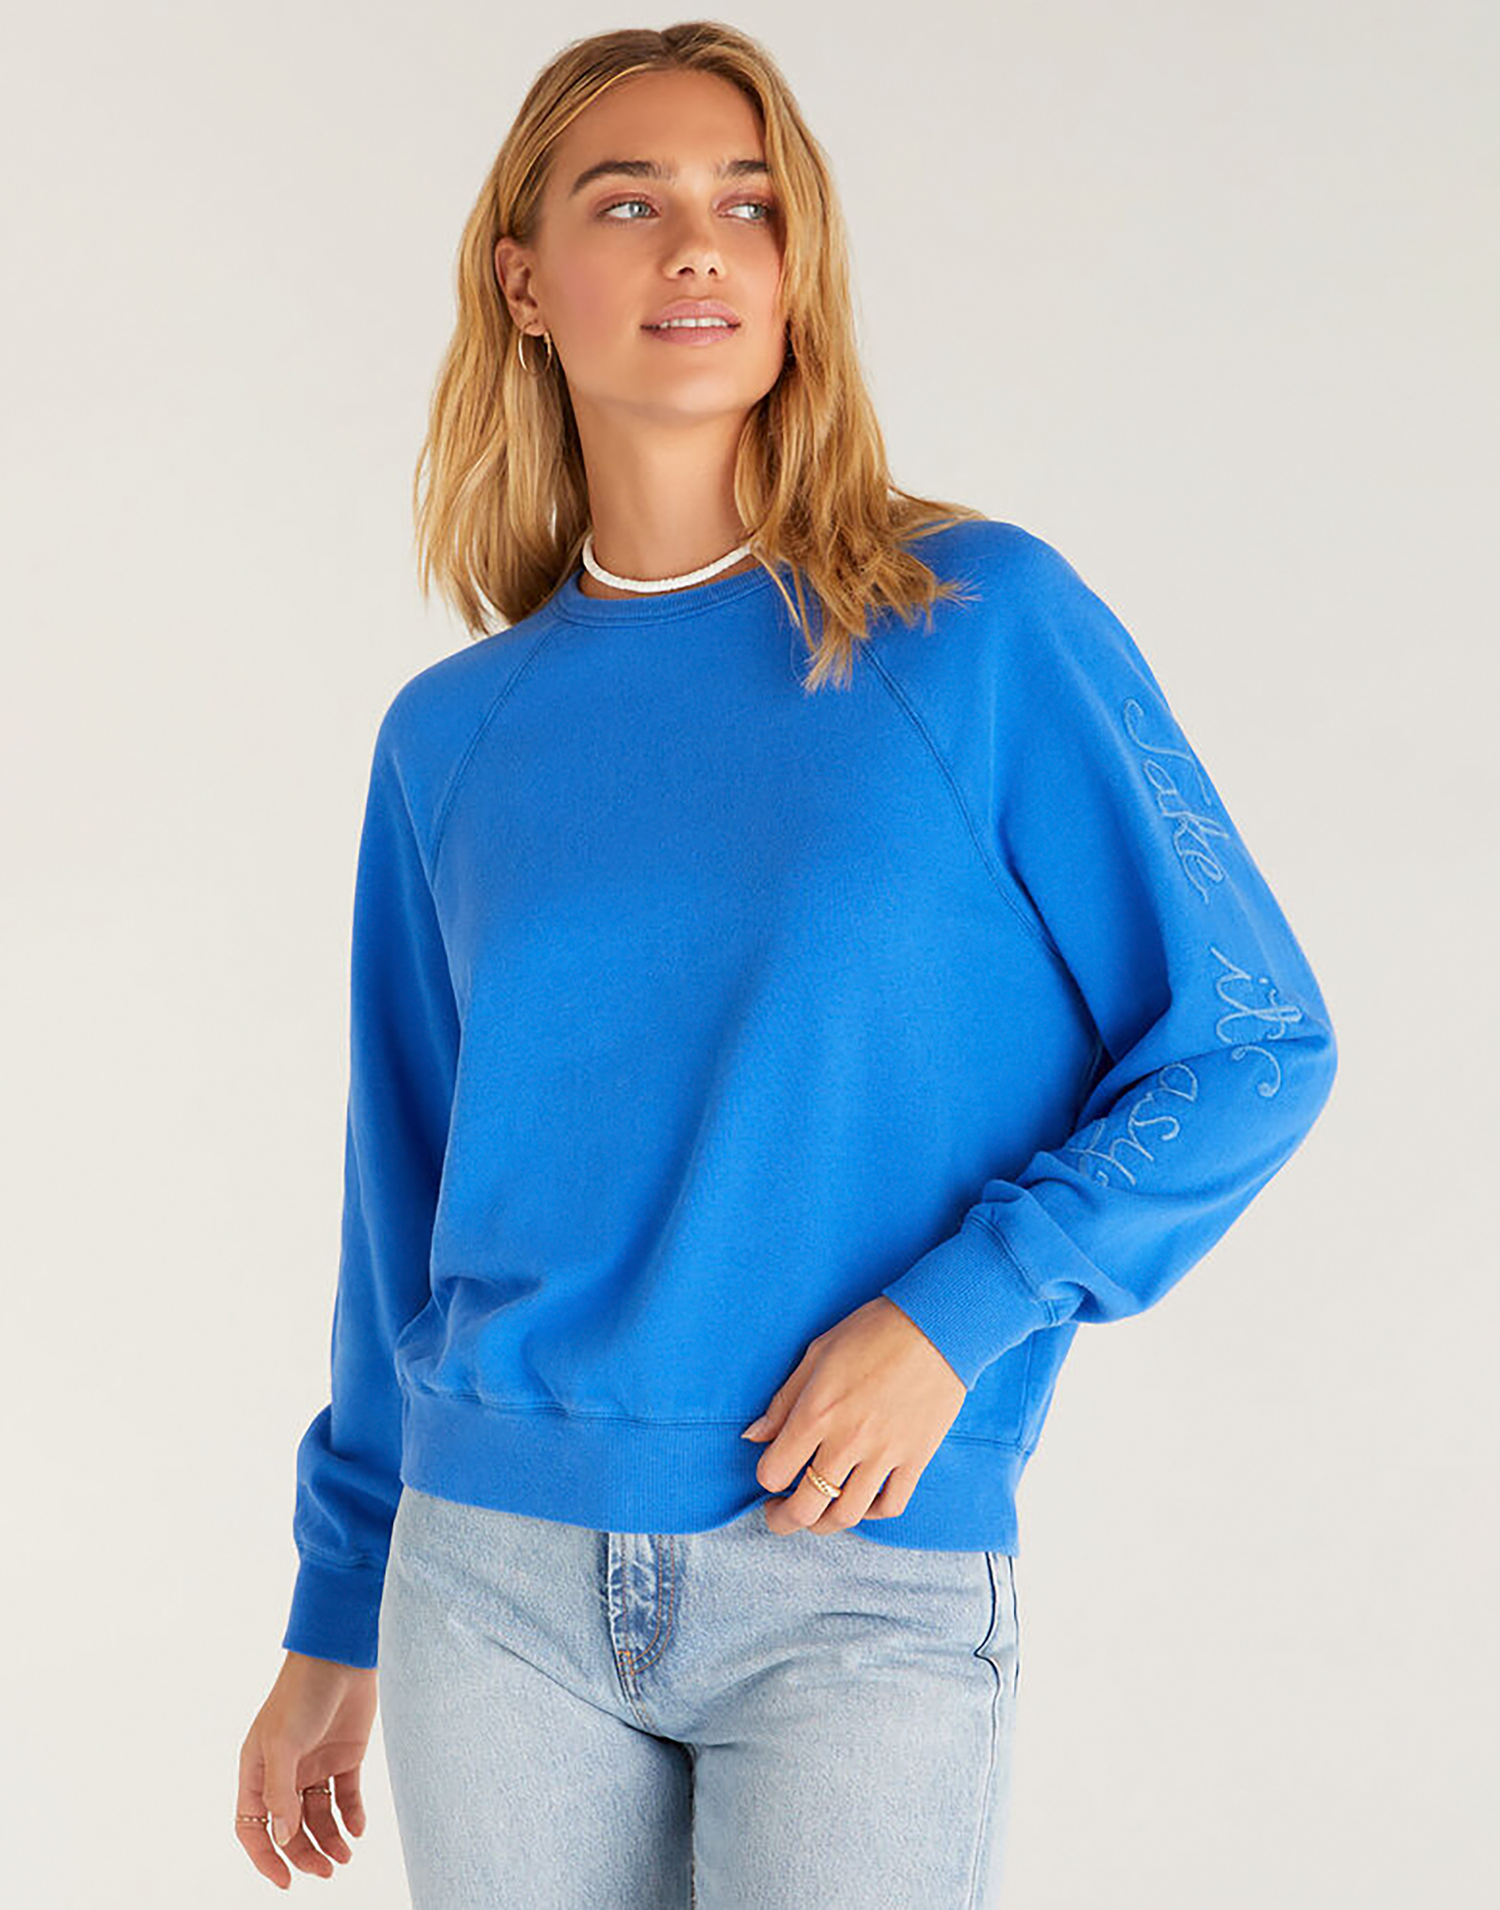 Vintage Statement Sweatshirt by Z Supply in Bright Blue - Front View